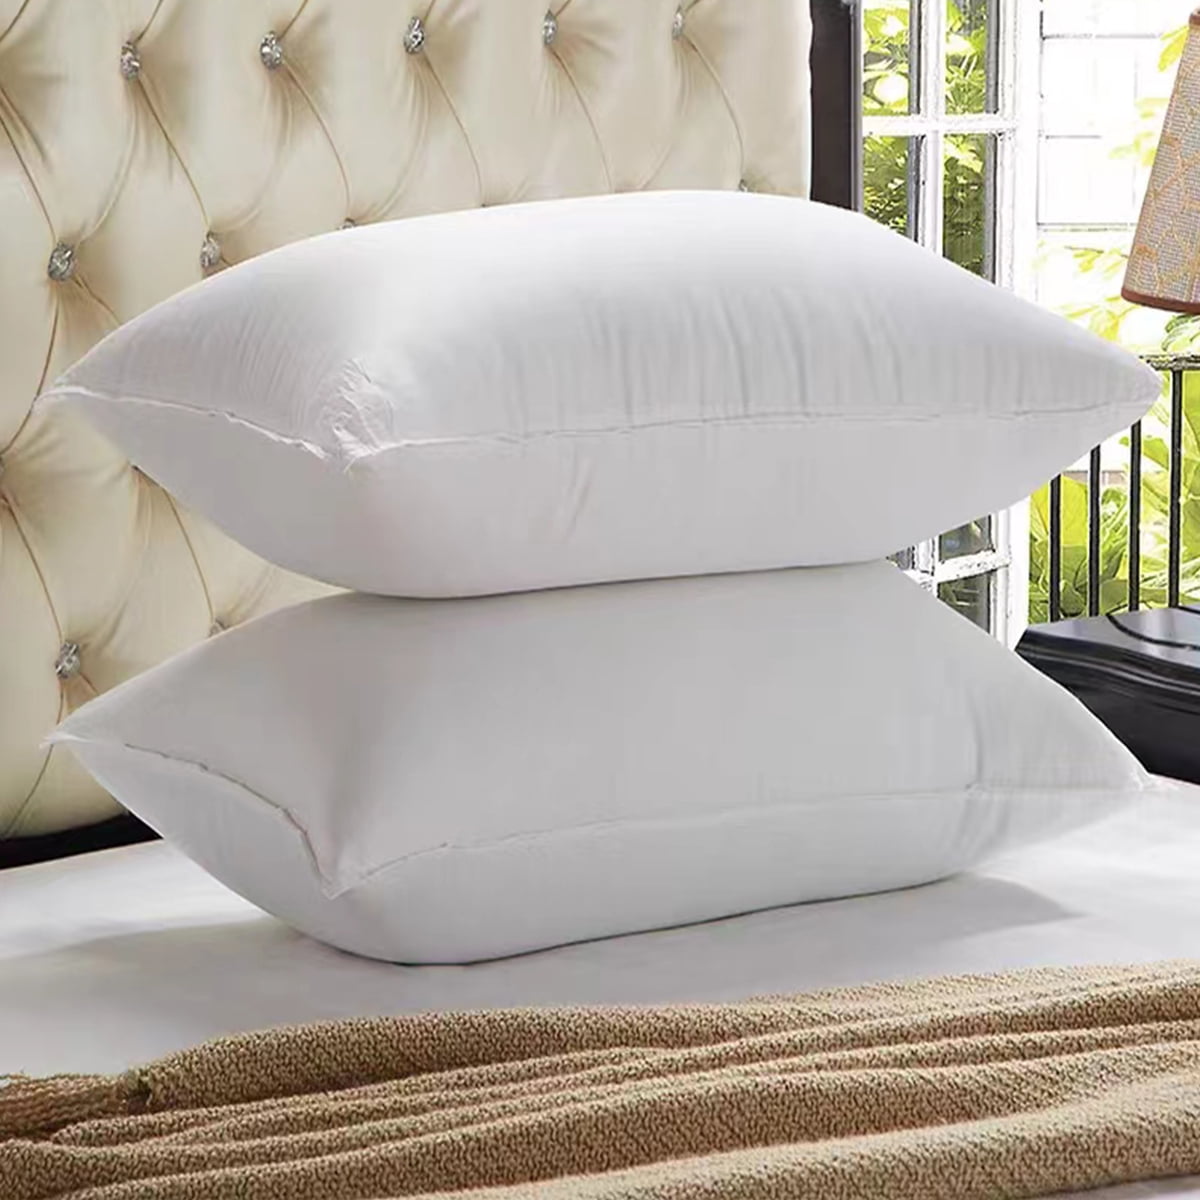 Phantoscope 100% Cotton Stuffer Square Decorative Throw Pillow Insert, 18 inch x 18 inch, 1 Pack